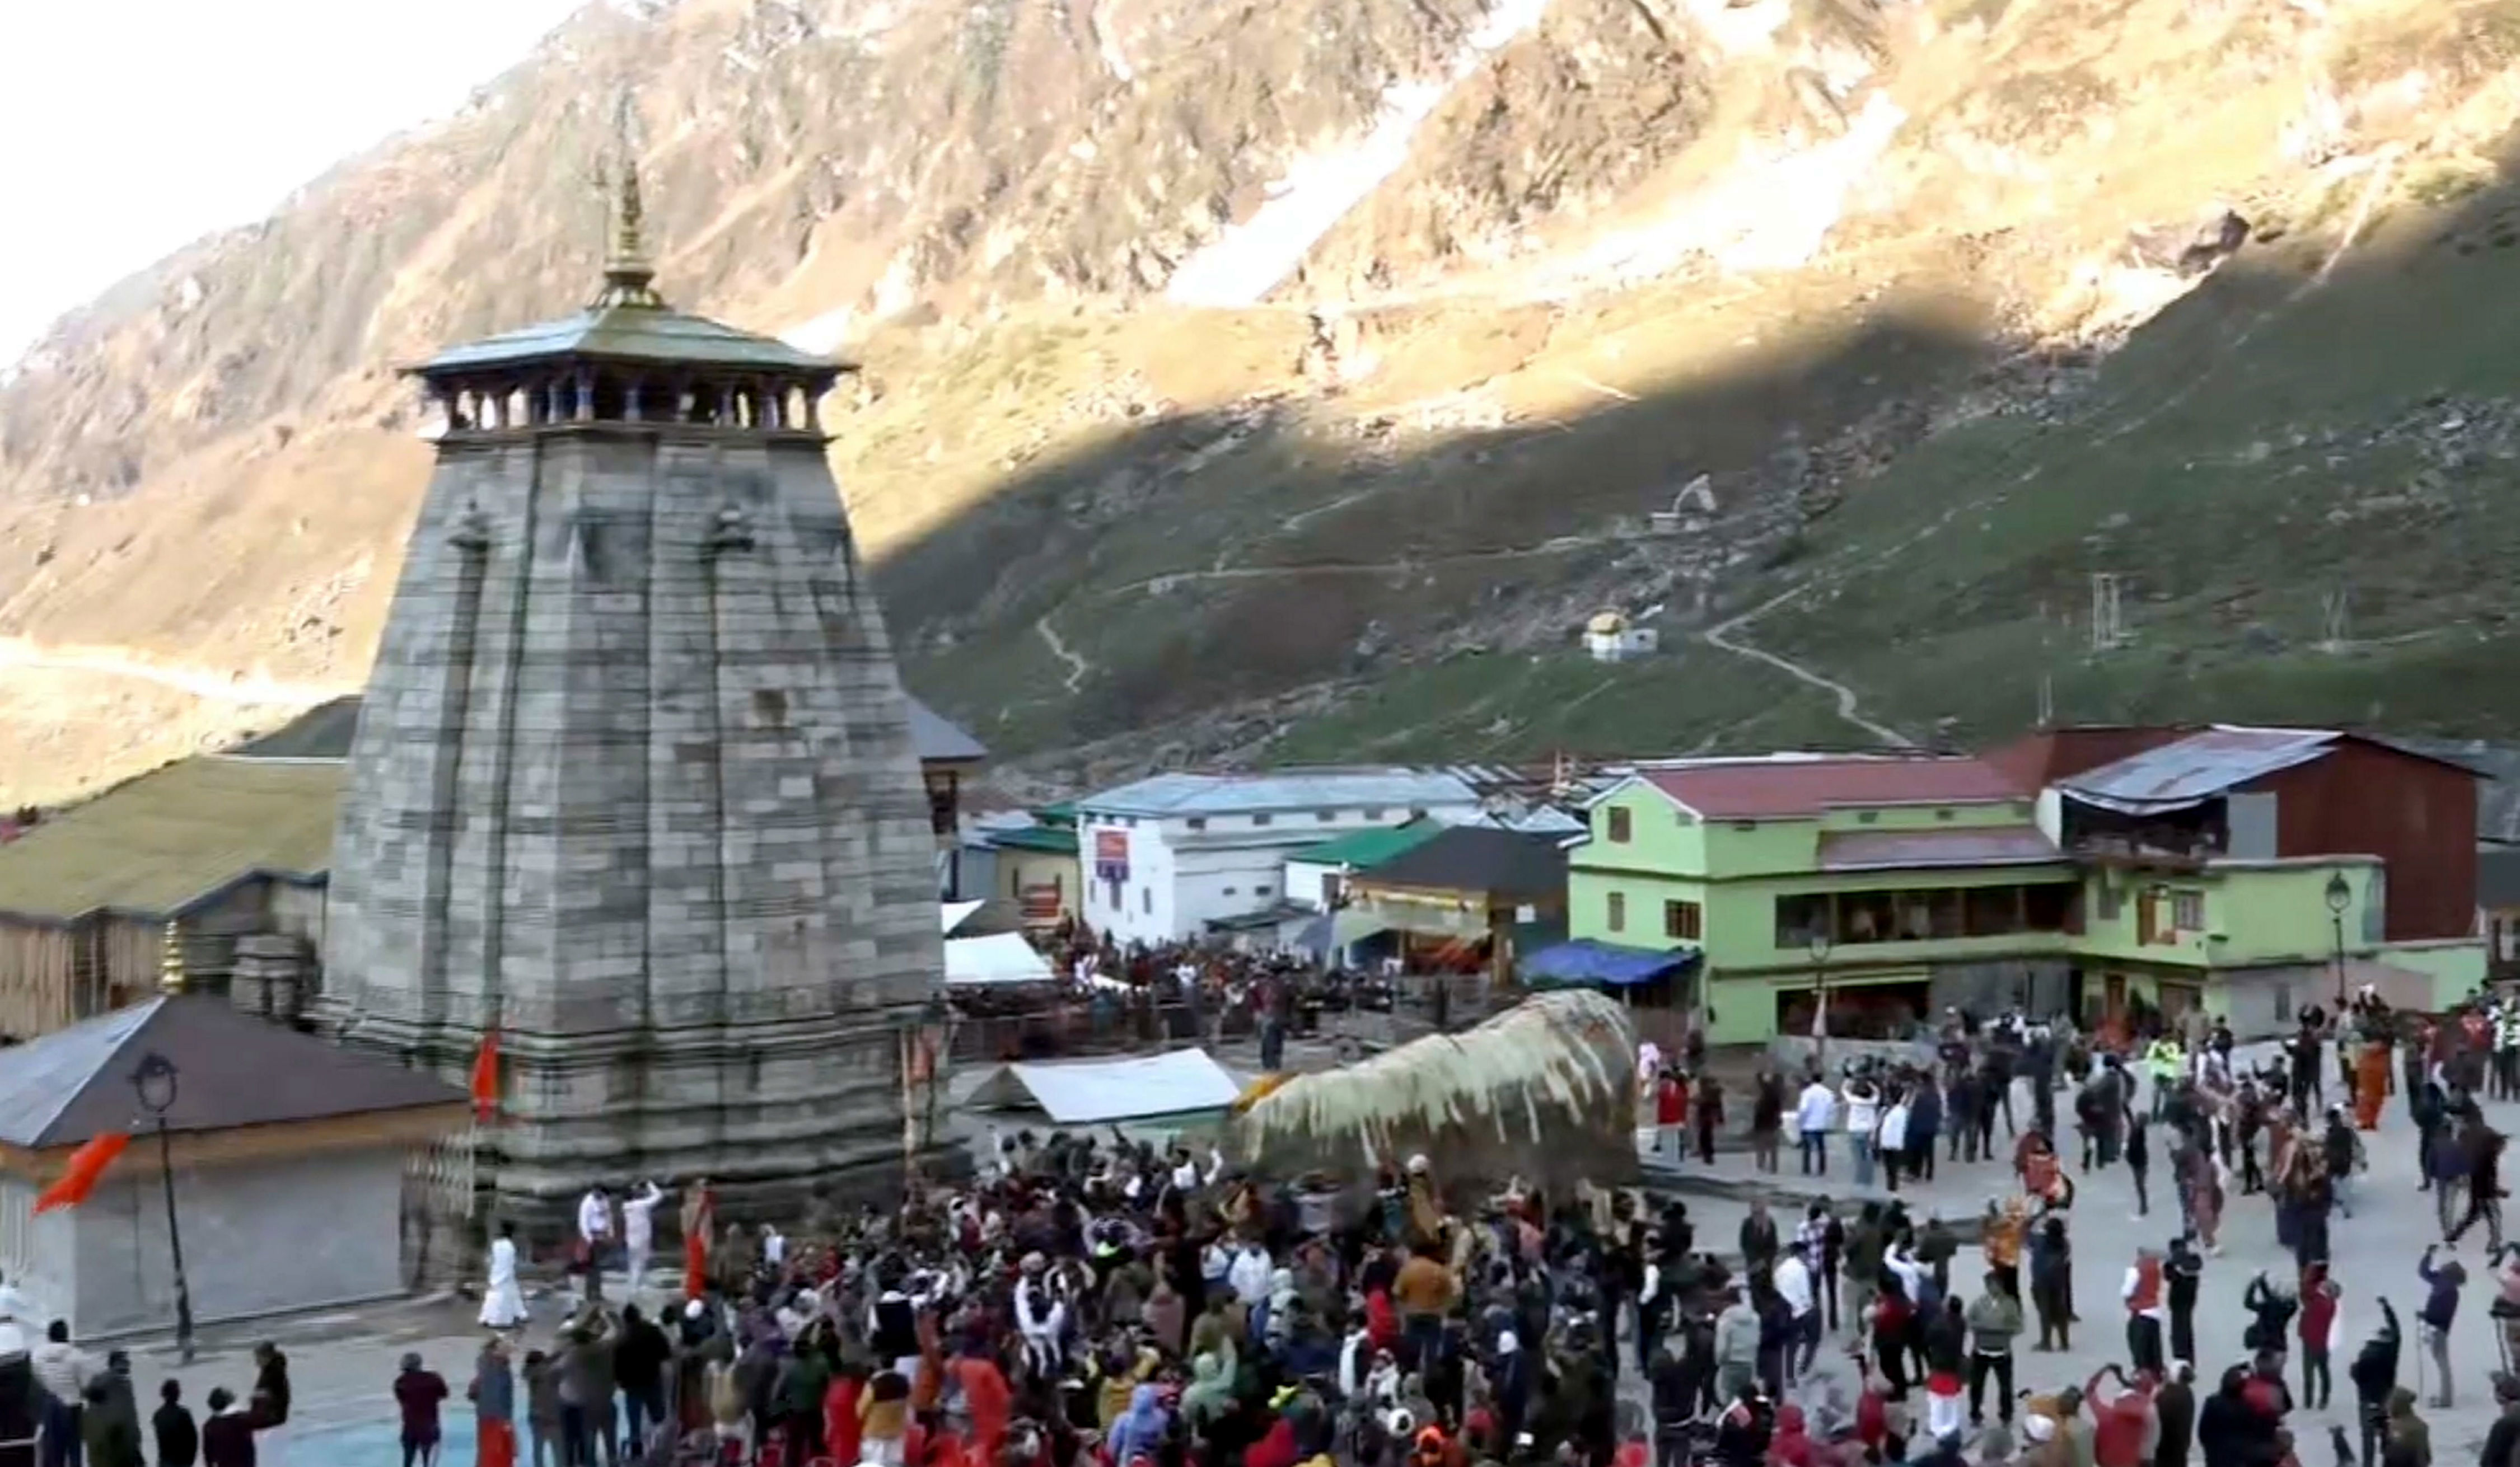 chardham yatra begins: portals of kedarnath, yamunotri open for devotees